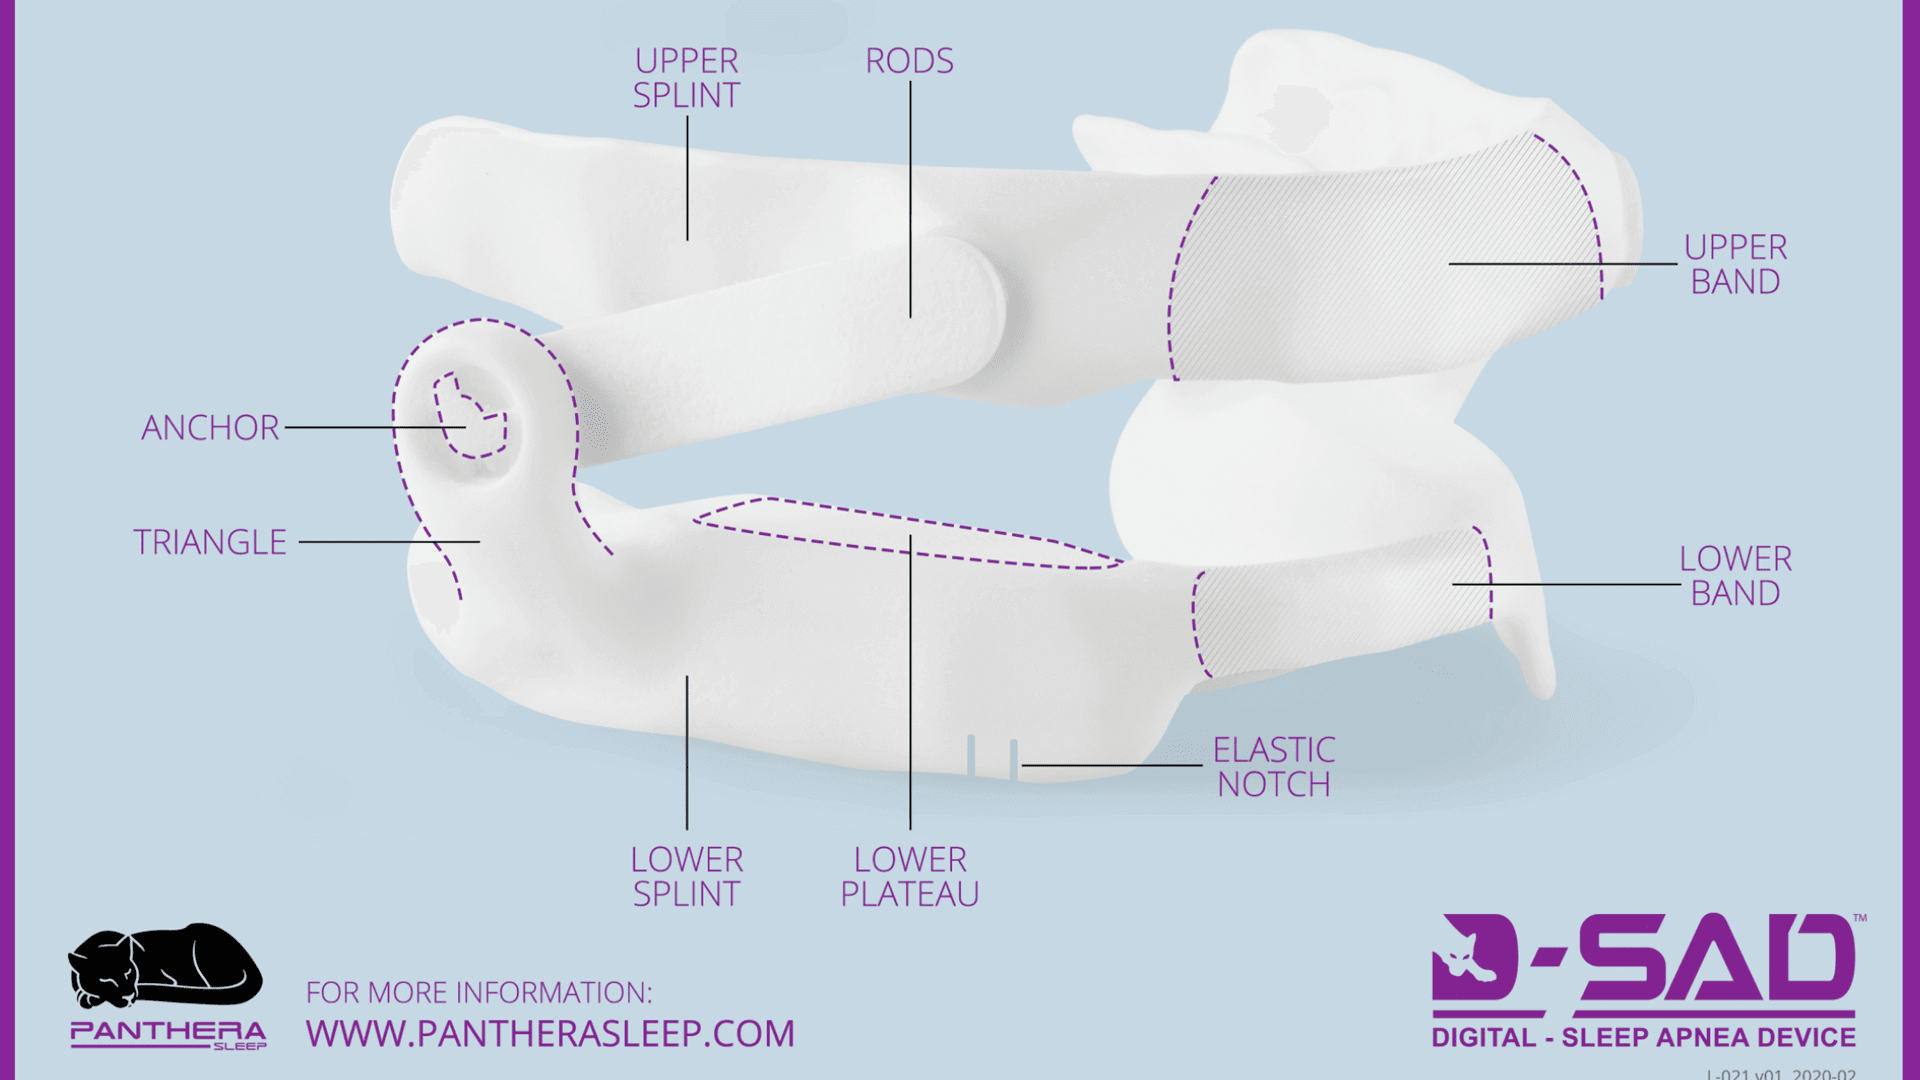 A diagram of the digital sleep apnea device